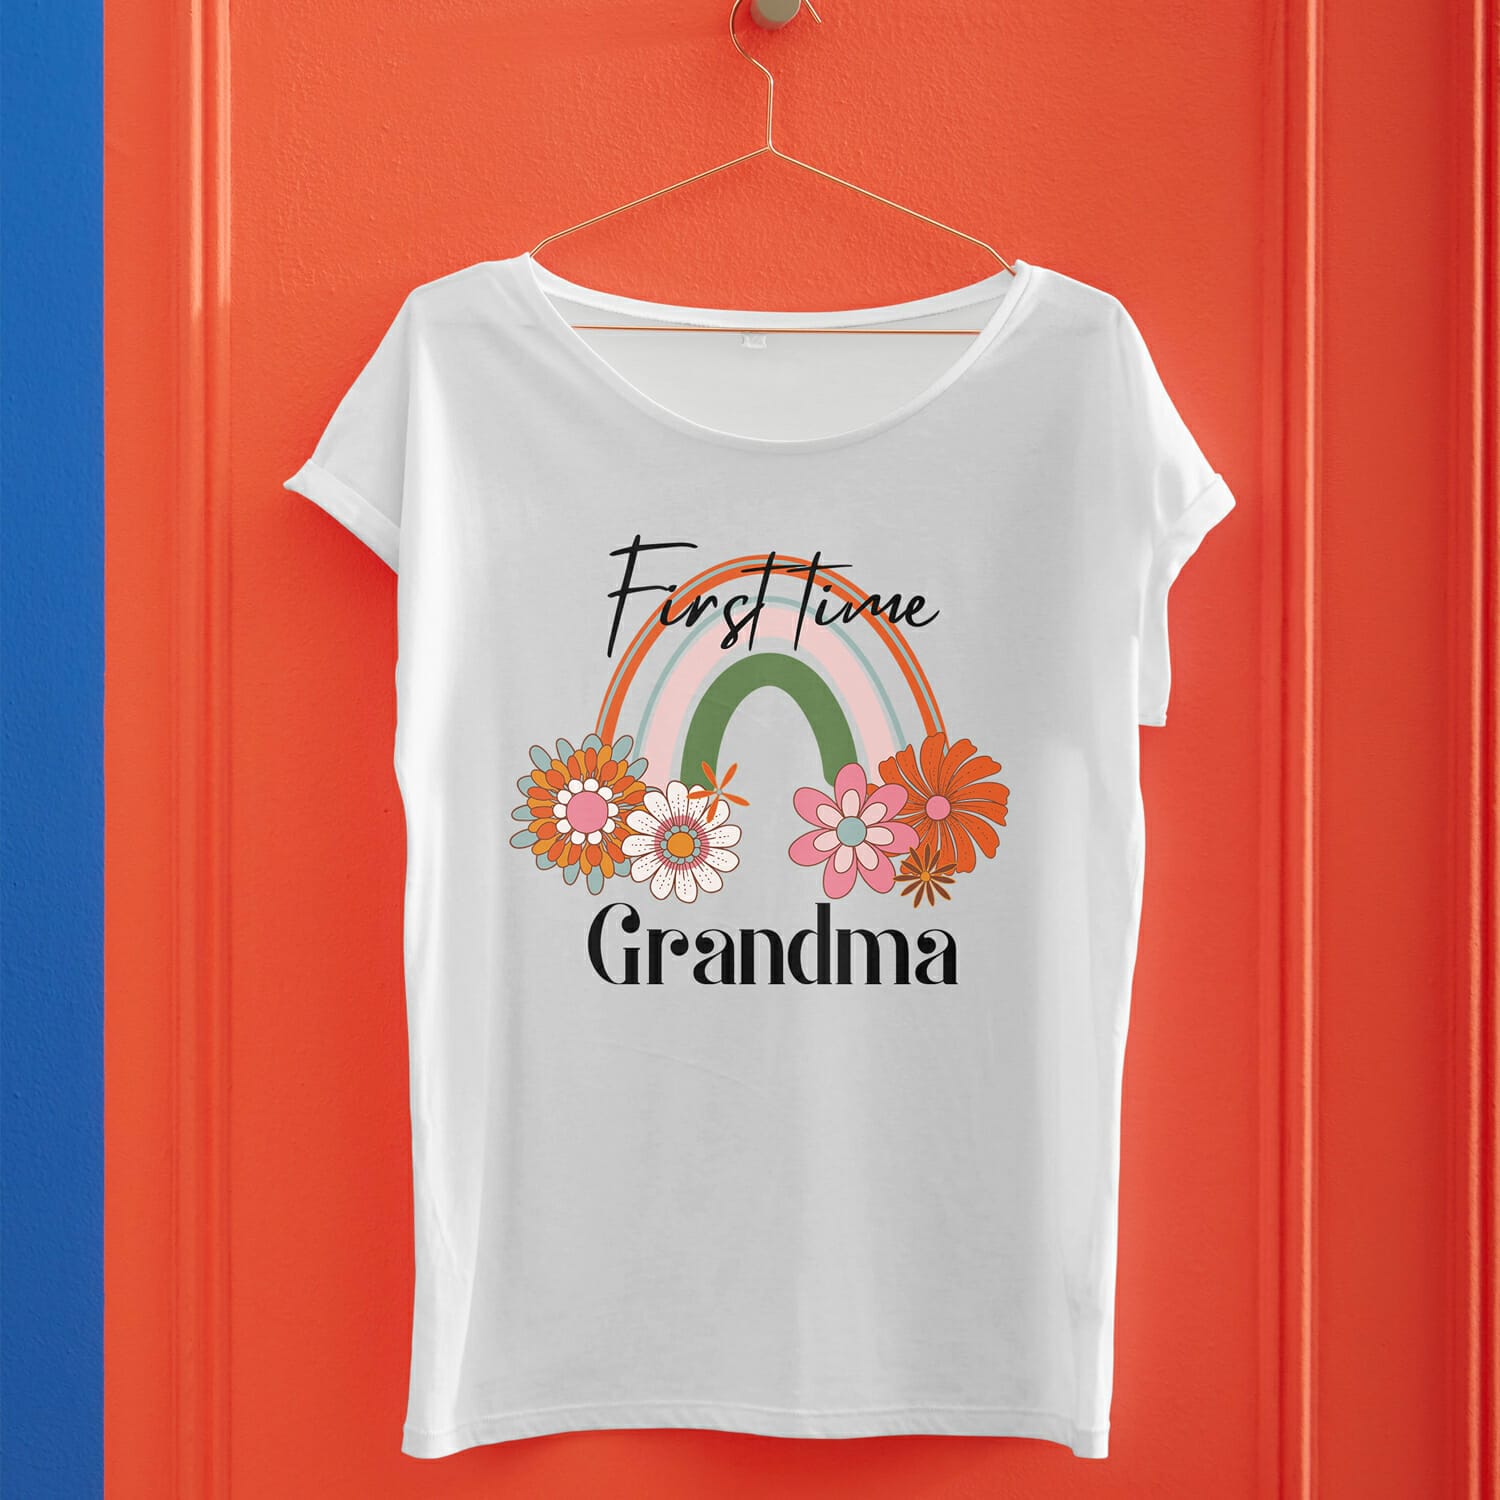 First Time Grandma Tshirt Design